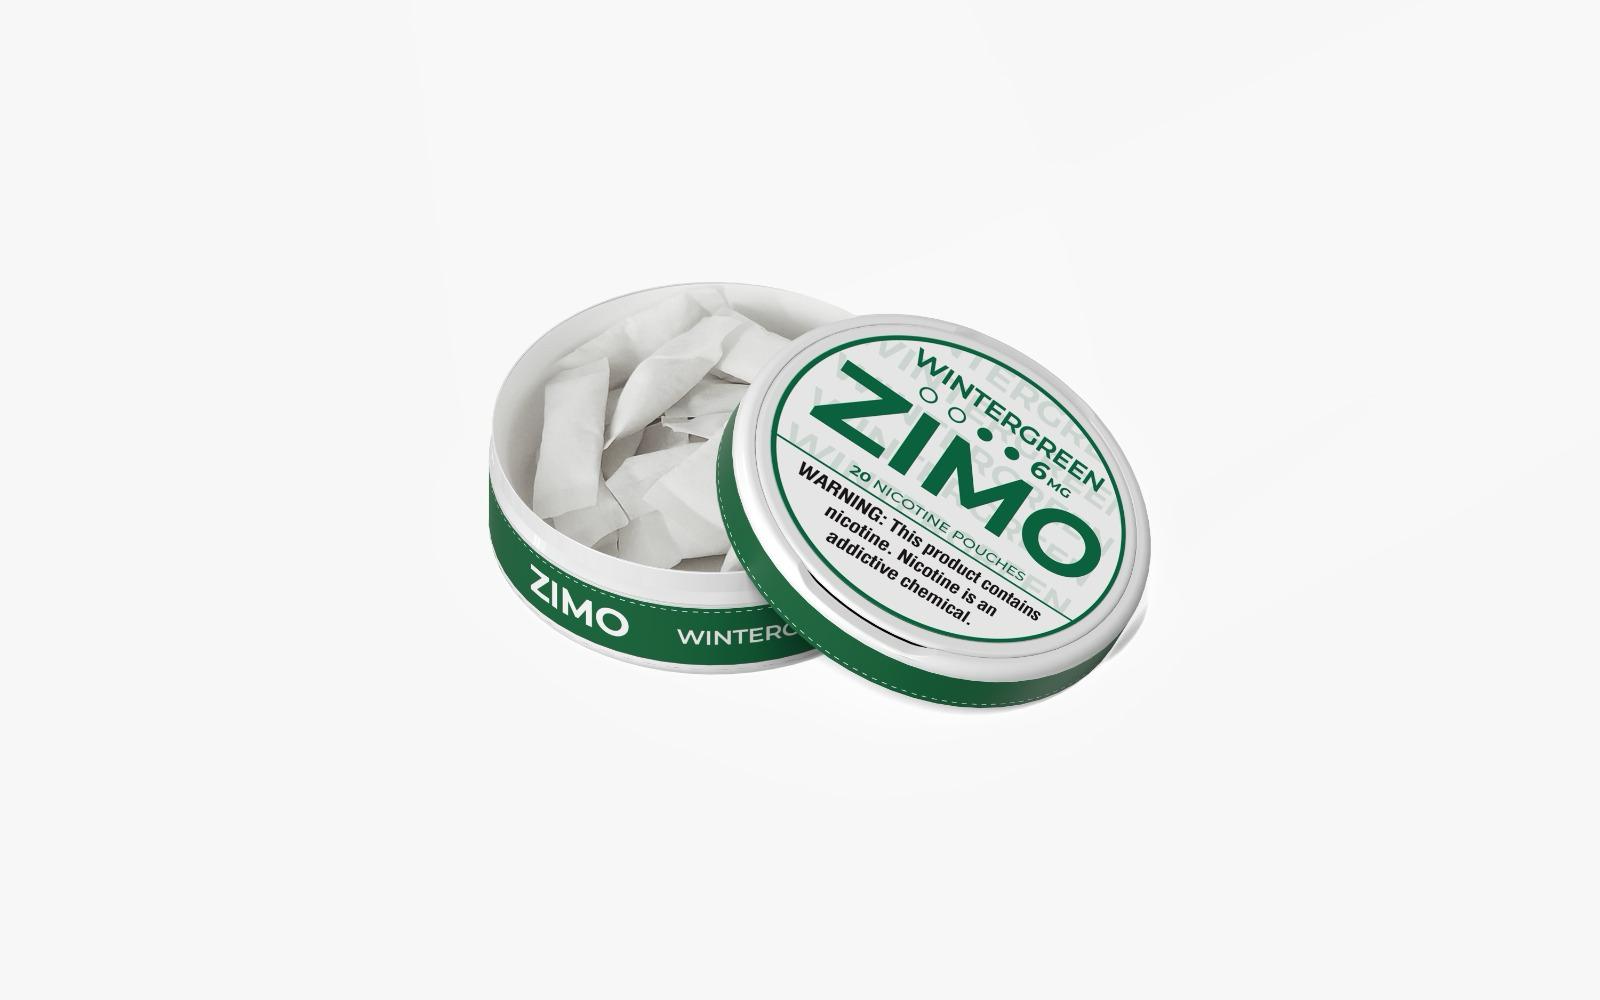 Wintergreen ZIMO Nicotine Pouches